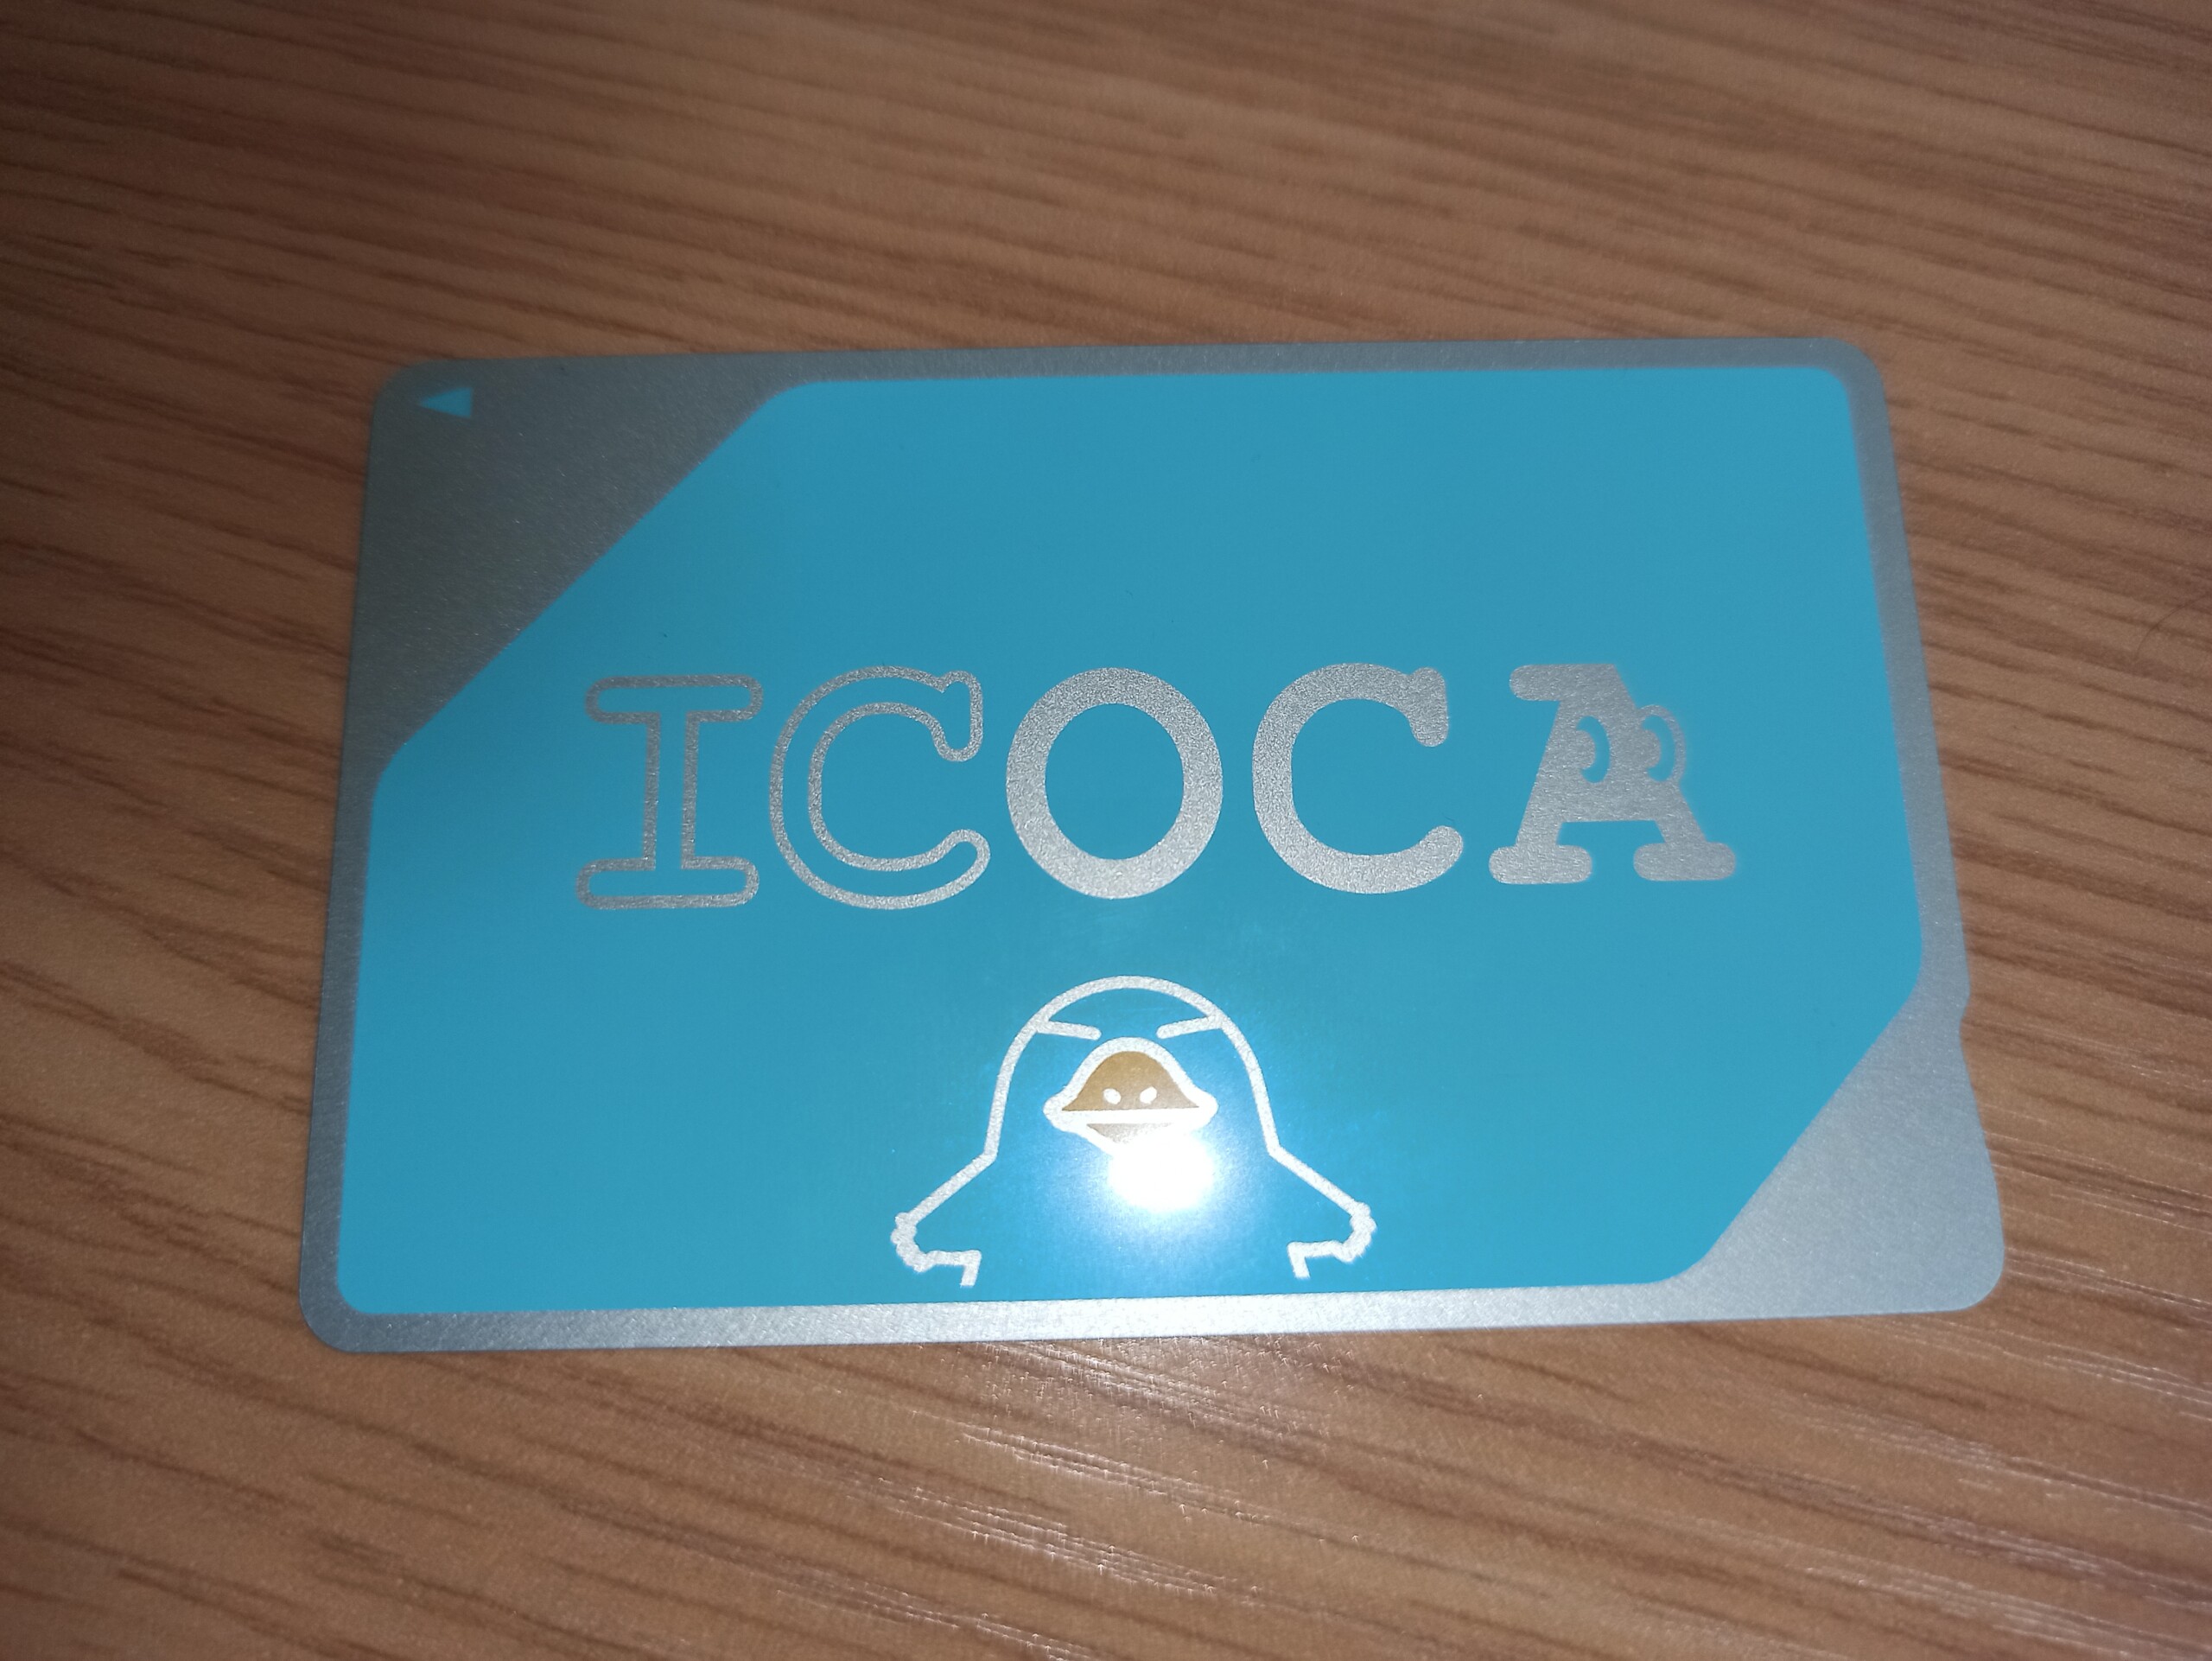 JR West Icoca IC Card, Japan